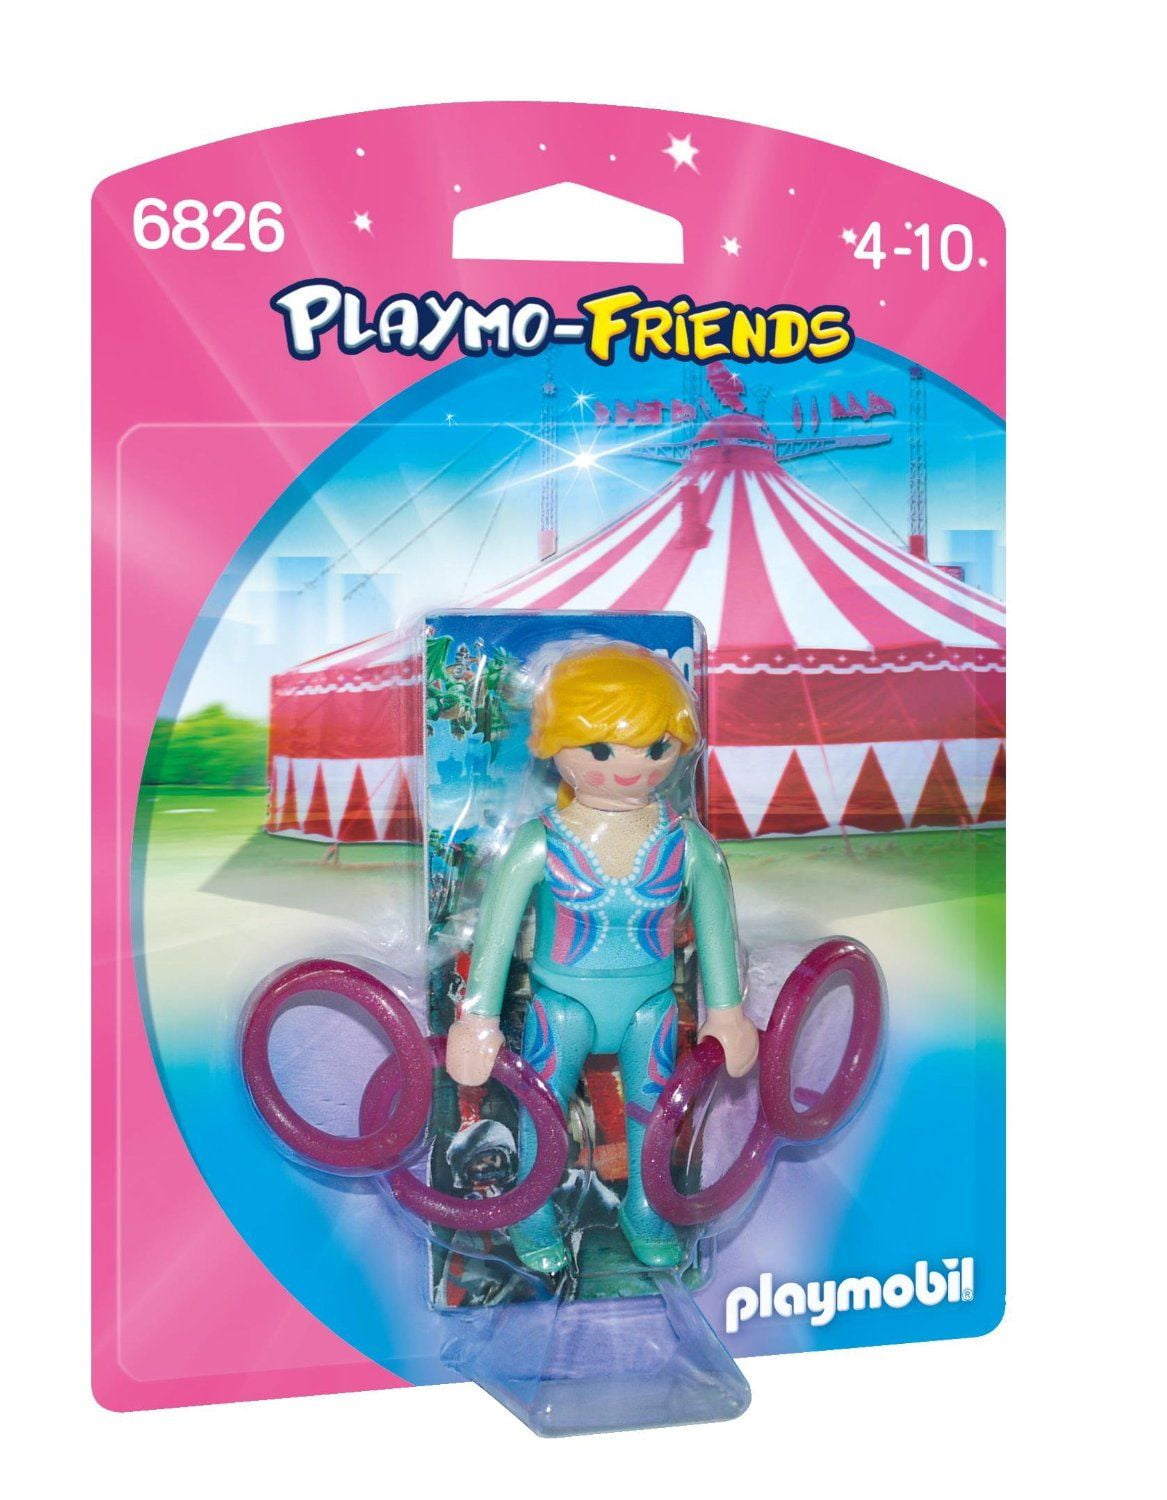 (Playmo-Friends) - Play Set by Playmobil -